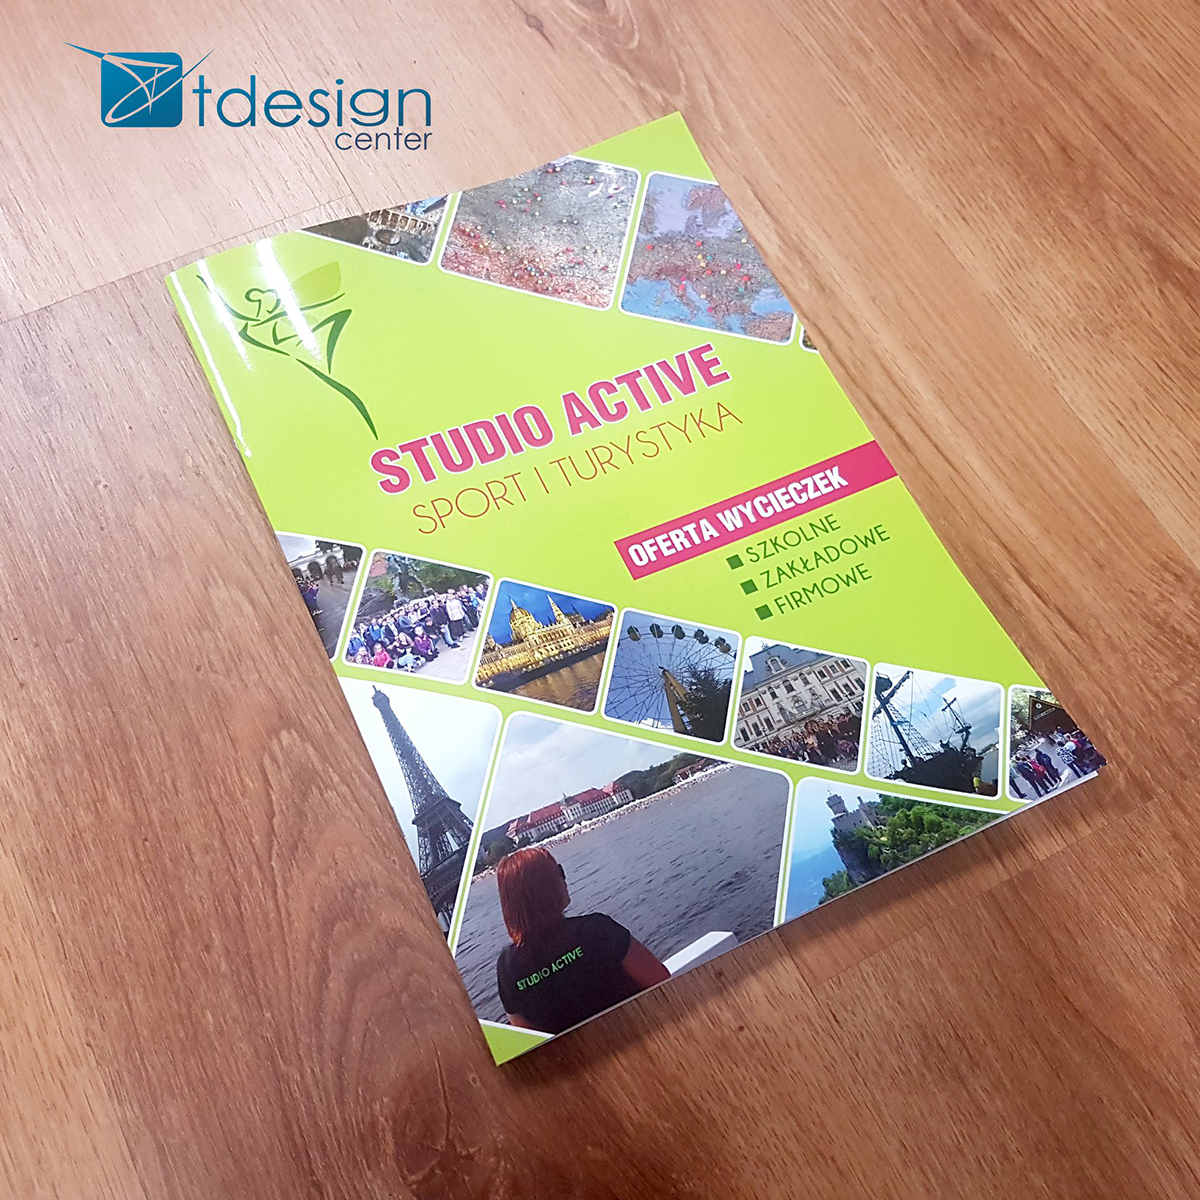 Katalog biura podróży Studio Active - projekt + druk